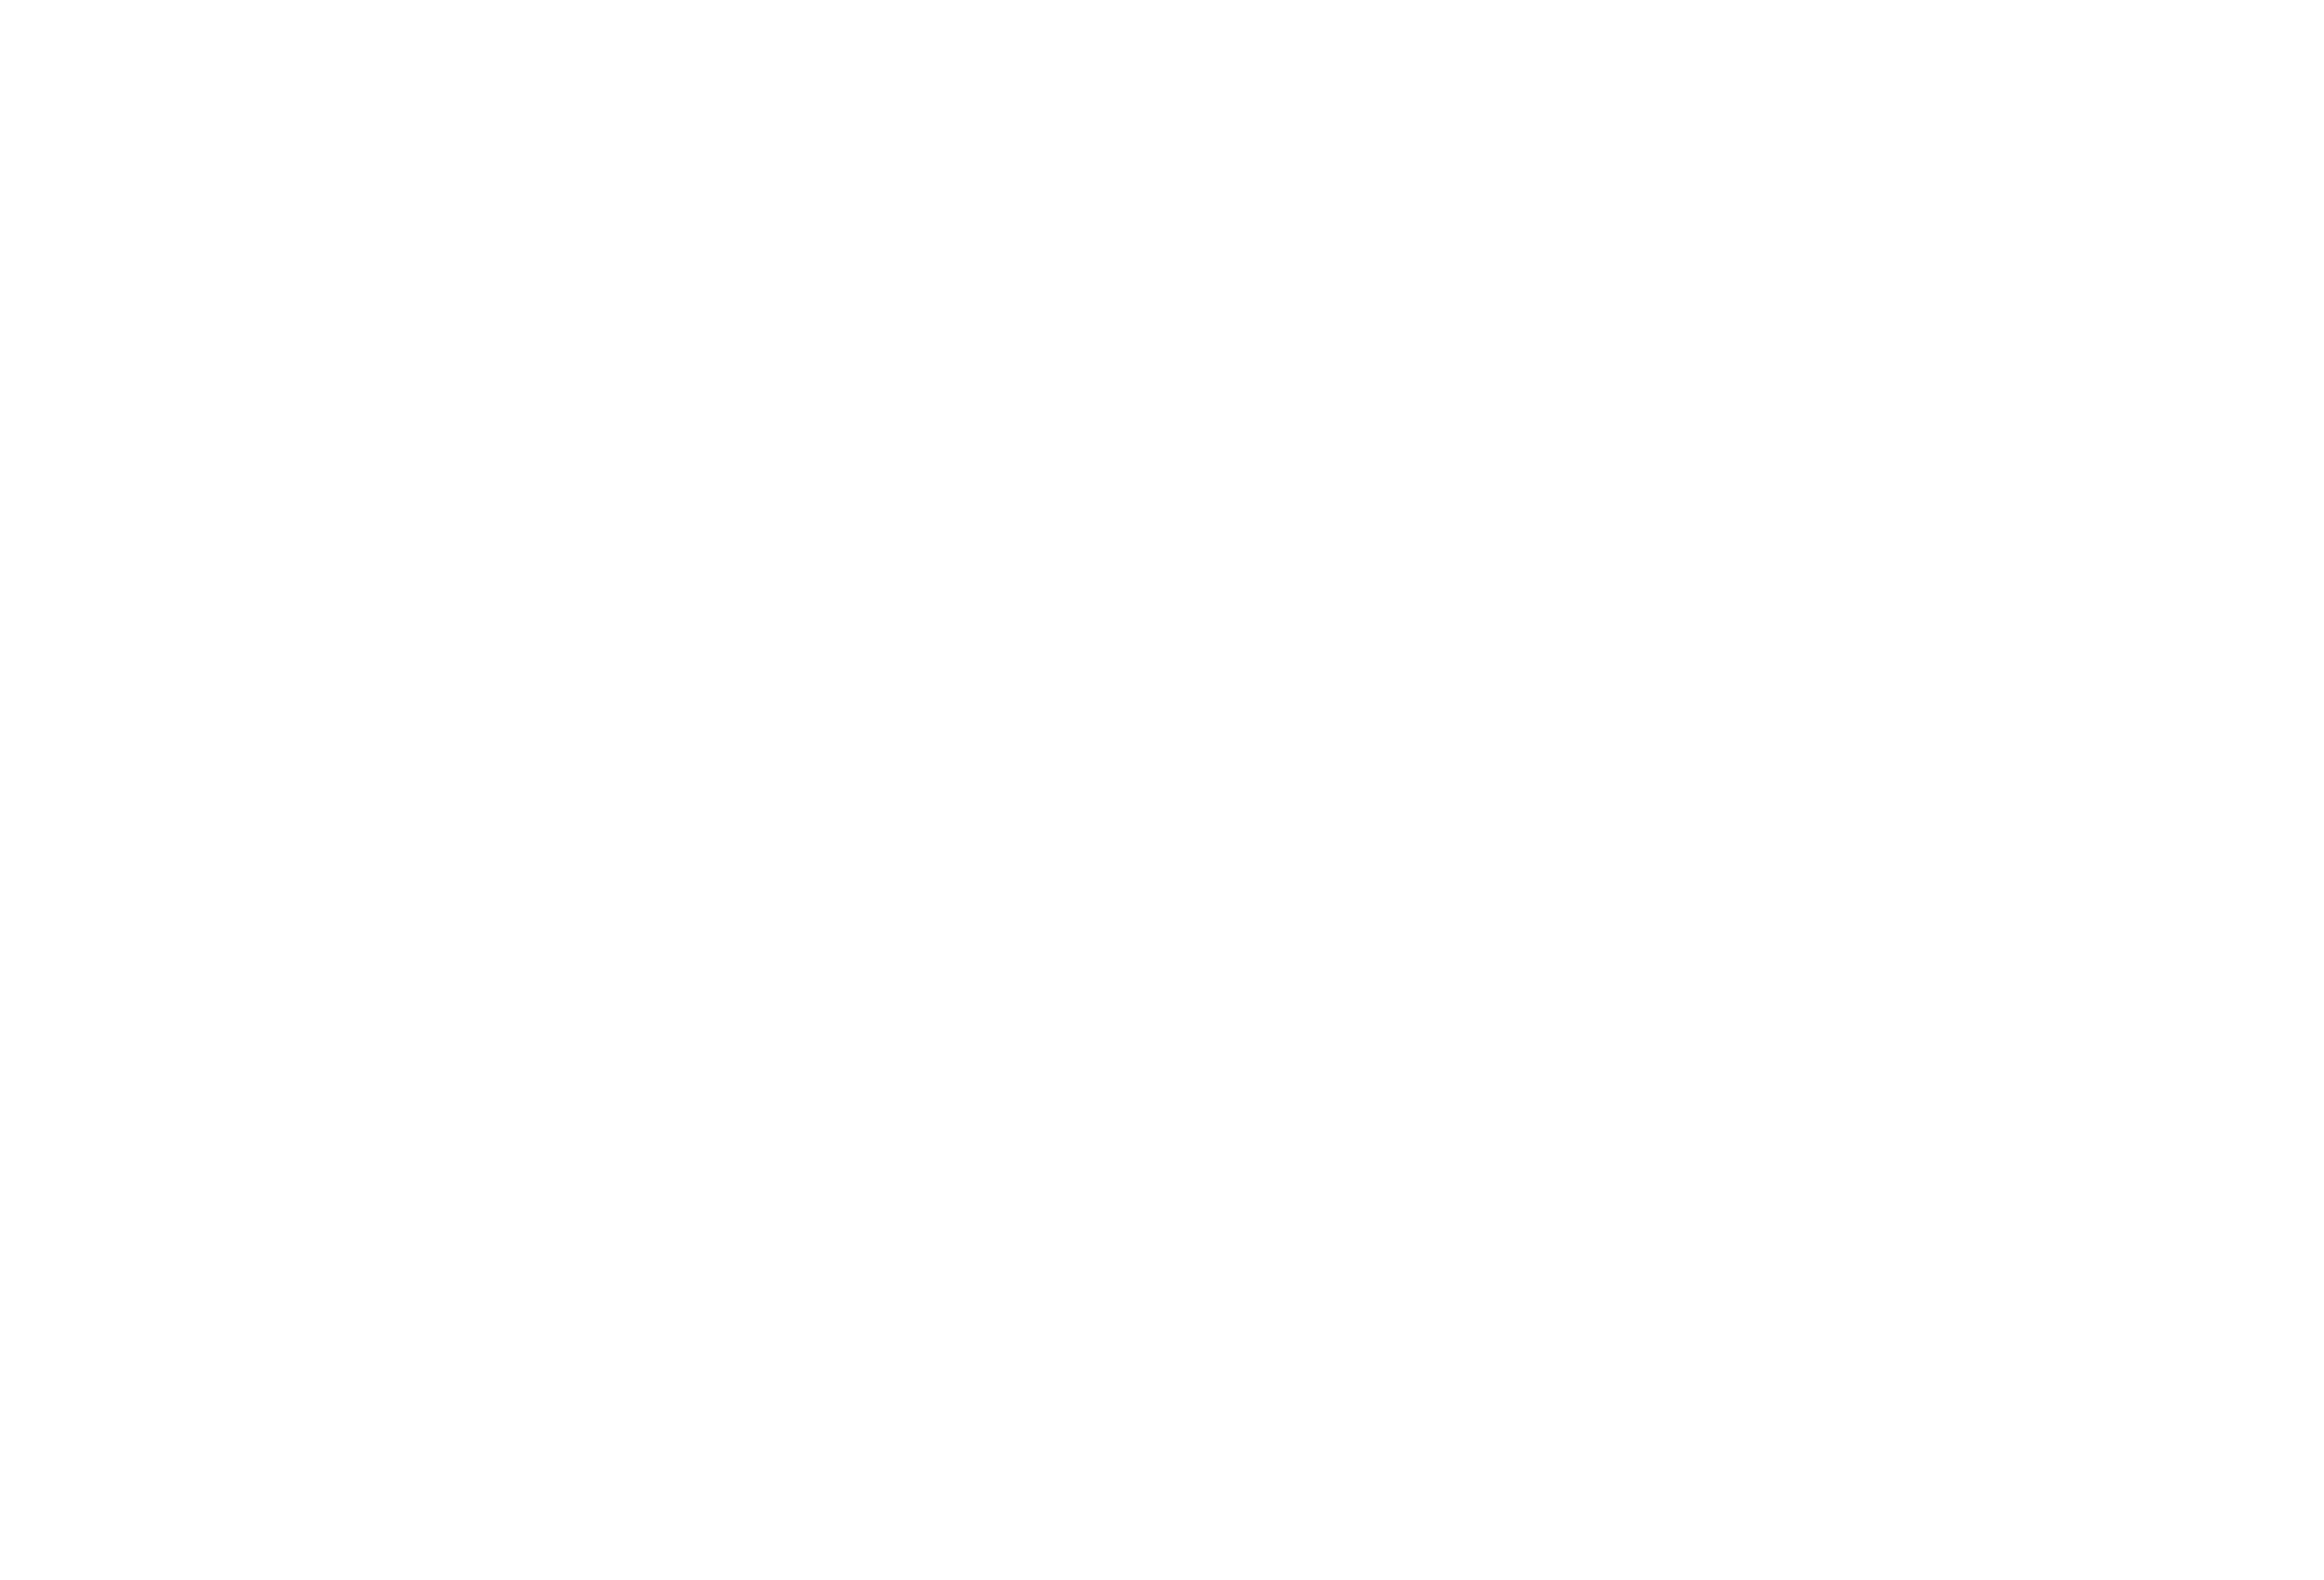 Festival Cine Cáceres